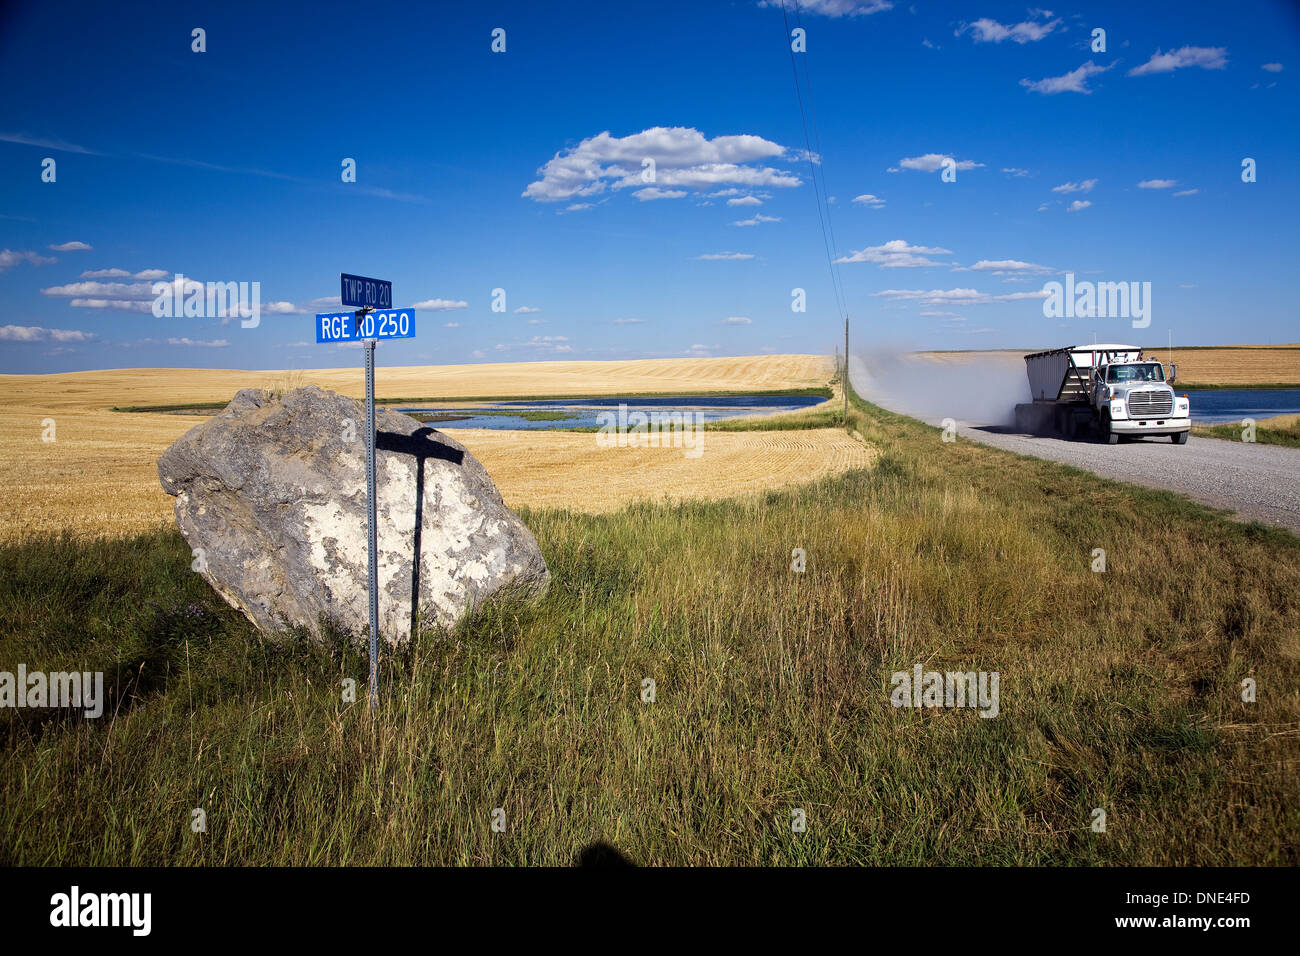 Camion de transport du grain on rural road, au sud de l'Alberta, Canada. Banque D'Images